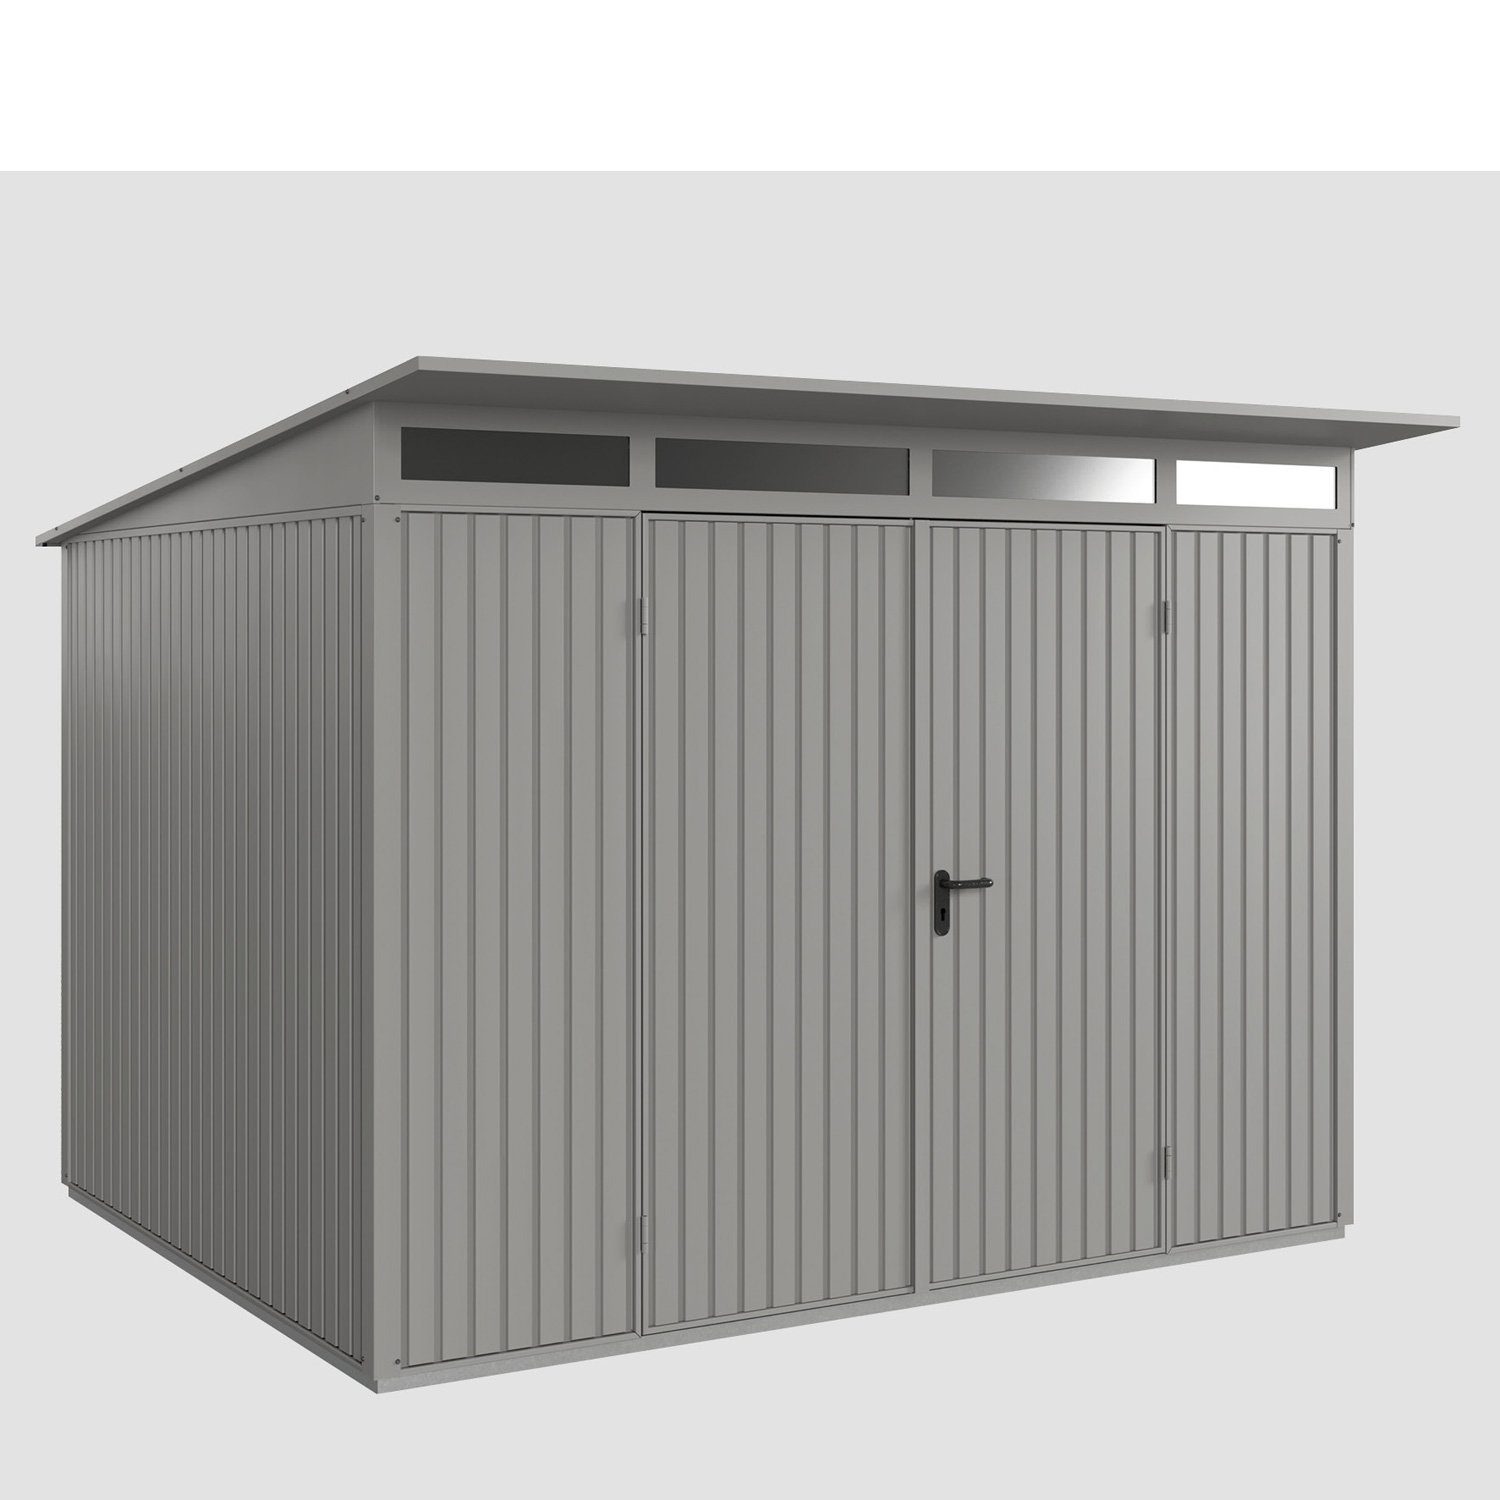 Hörmann Ecostar Gerätehaus Metall-Gerätehaus Trend mit Pultdach Typ 3, 2-flüglige Tür graualuminium